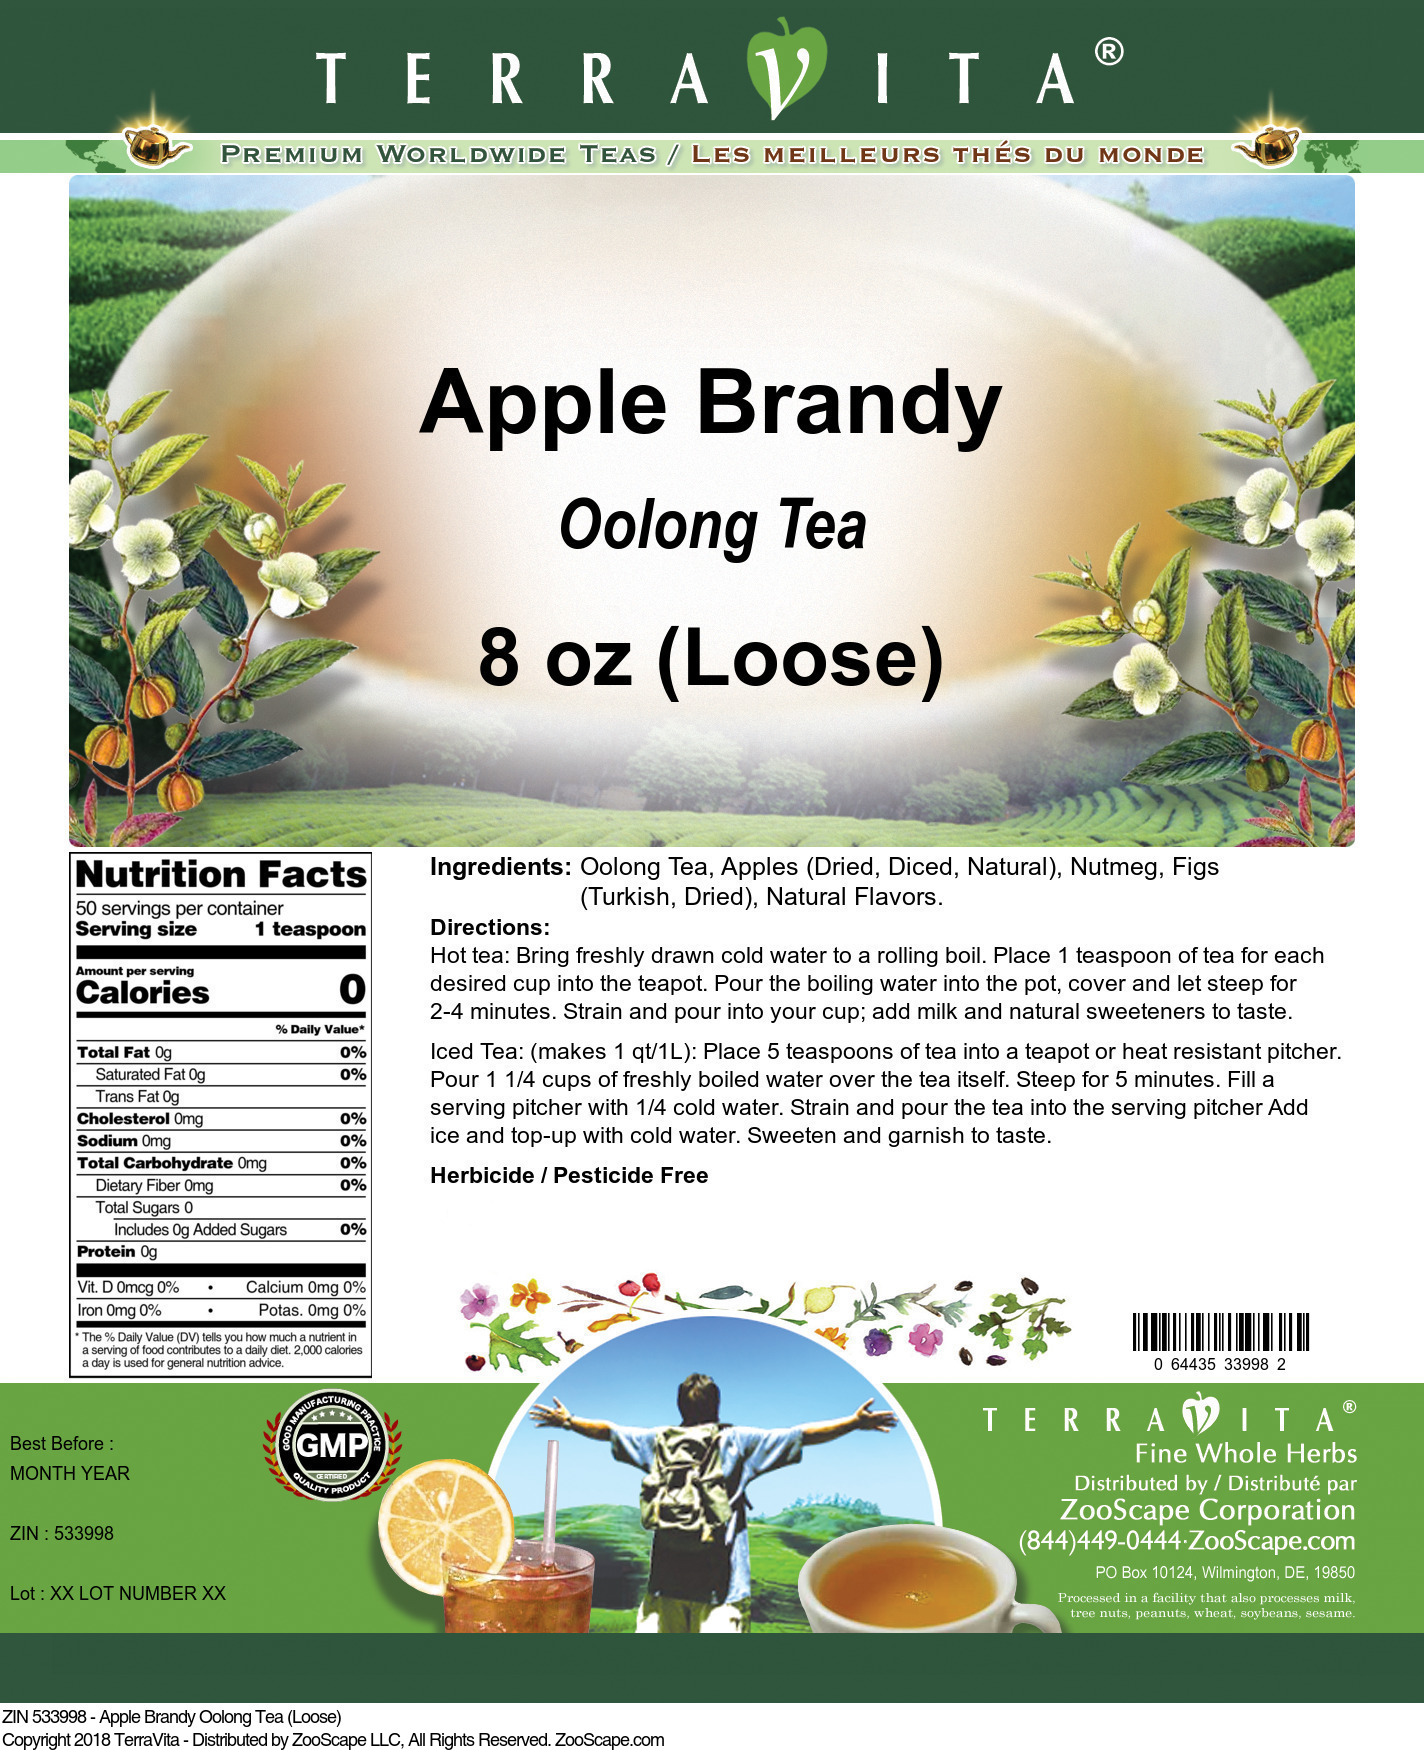 Apple Brandy Oolong Tea (Loose) - Label